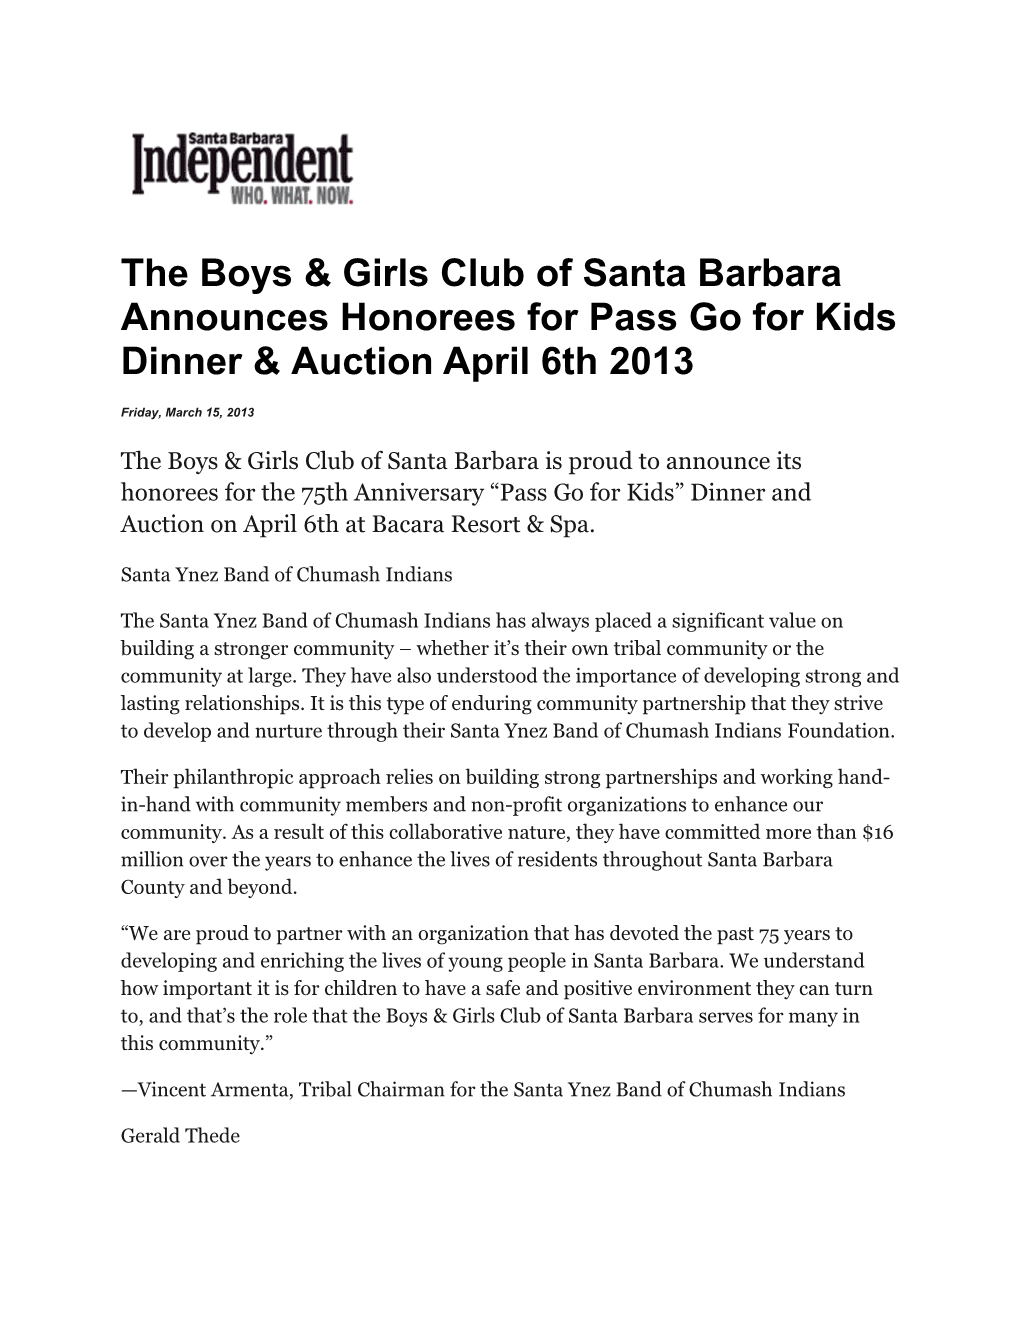 The Boysgirls Club of Santa Barbara Announces Honorees for Pass Go for Kids Dinnerauction